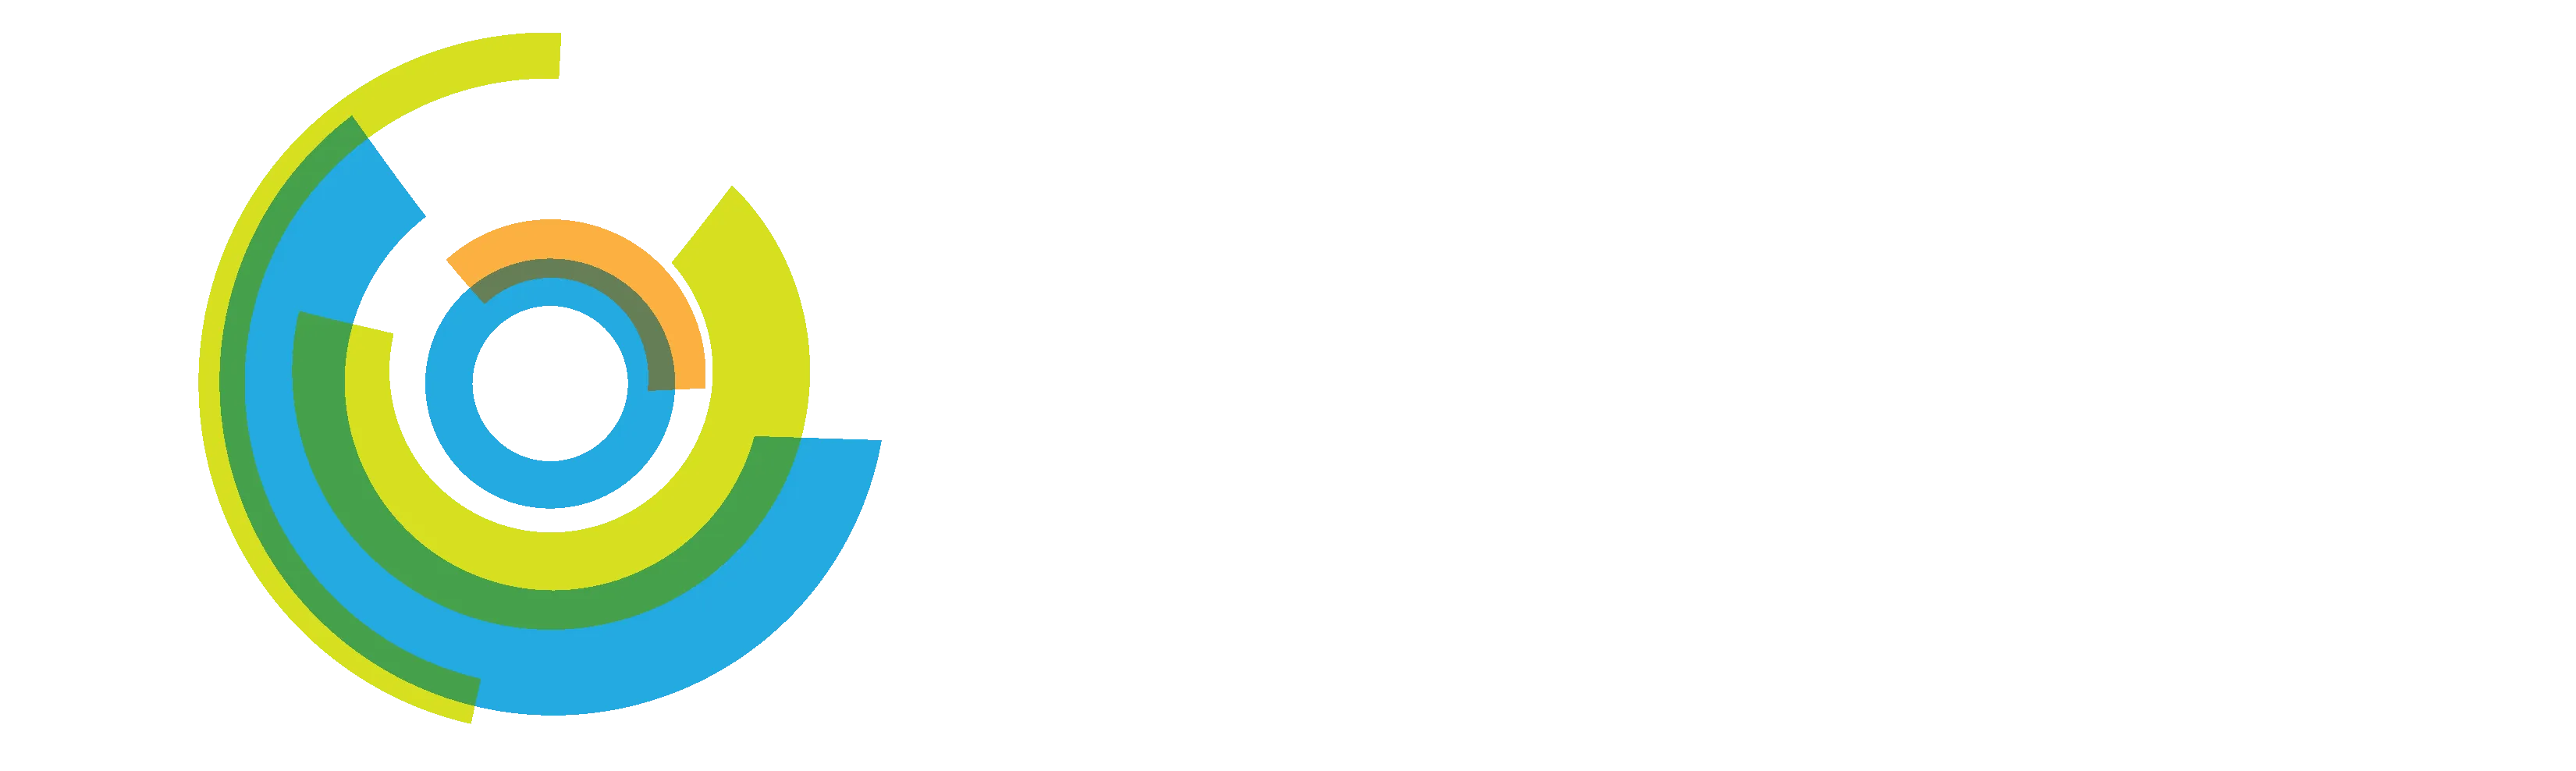 Community Blueprint